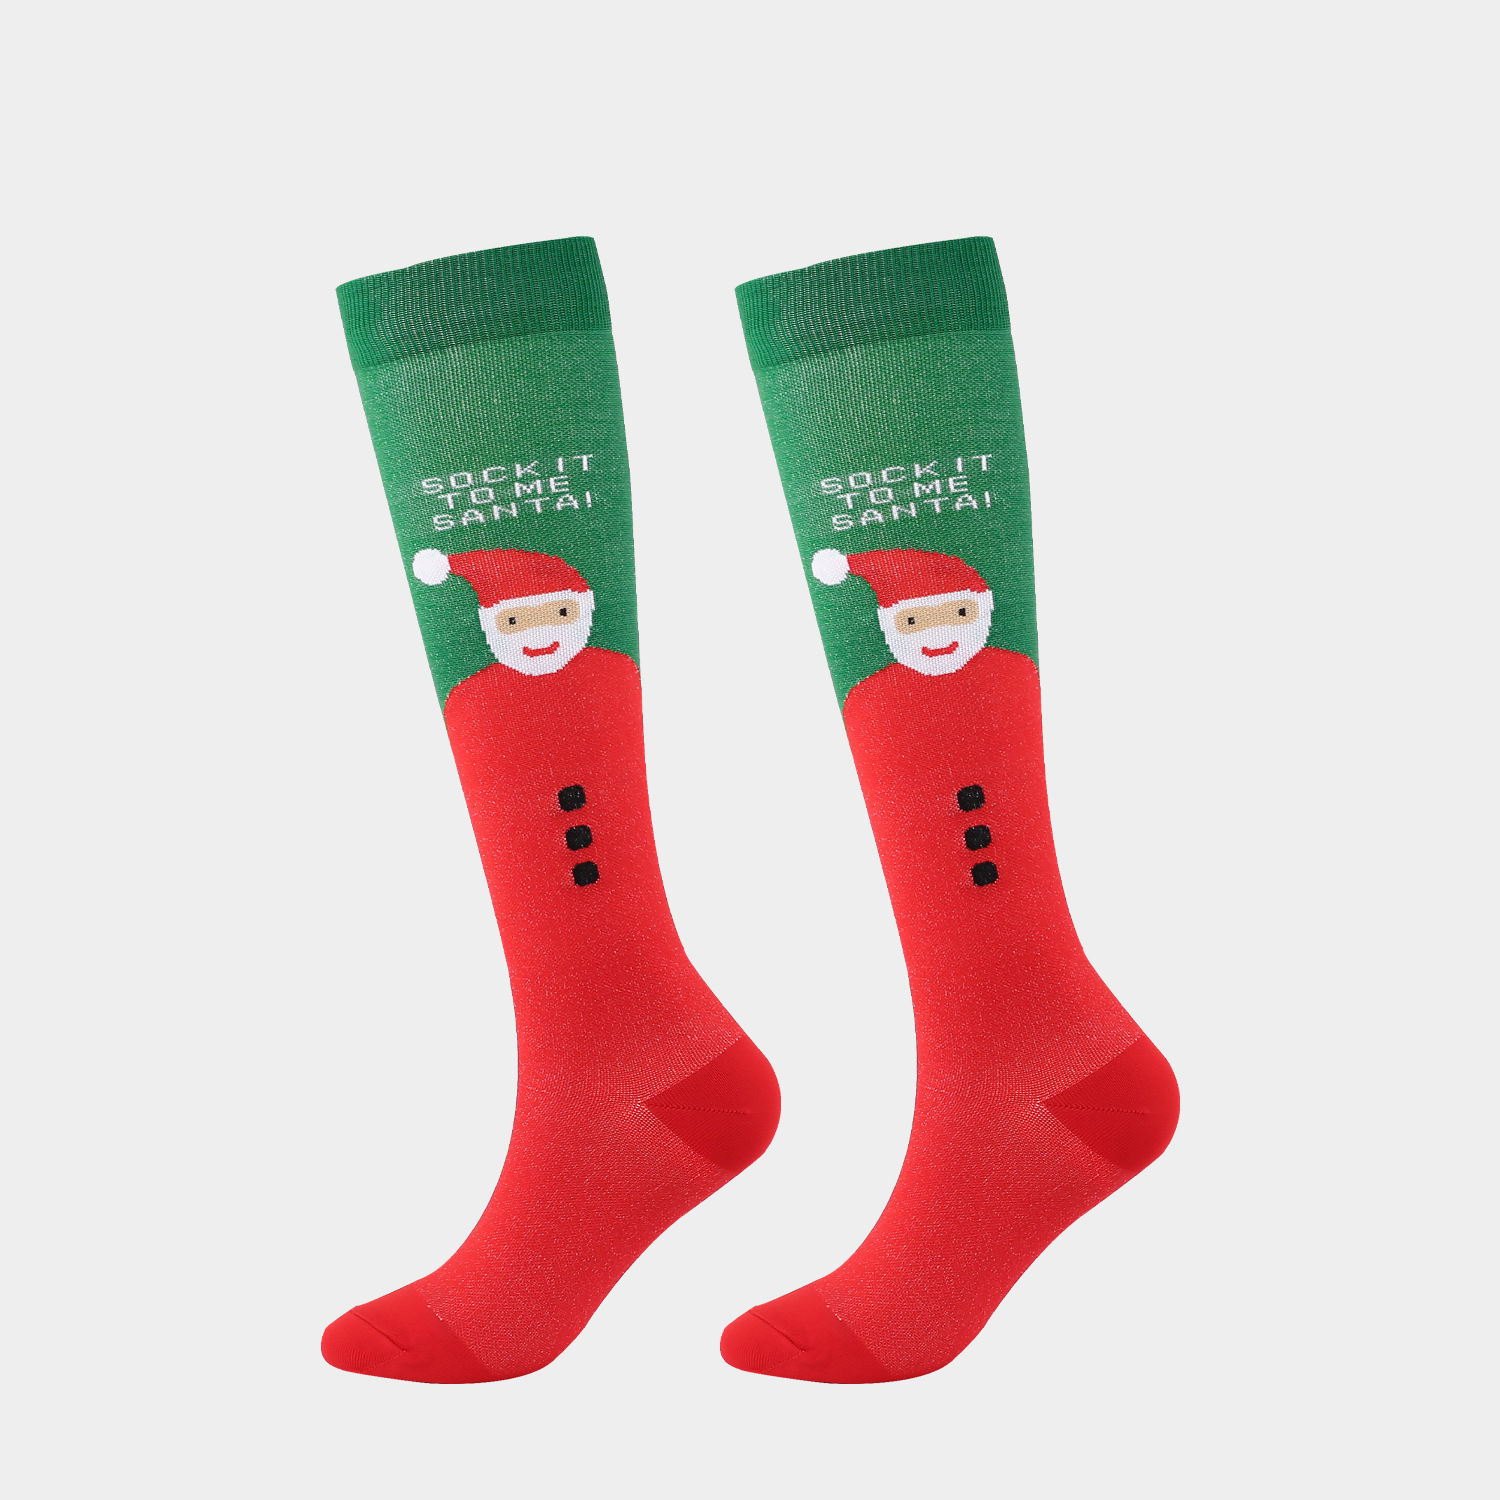 Adults Christmas Socks Snowman Green Stripes Festive Compression Socks Christmas Gifts